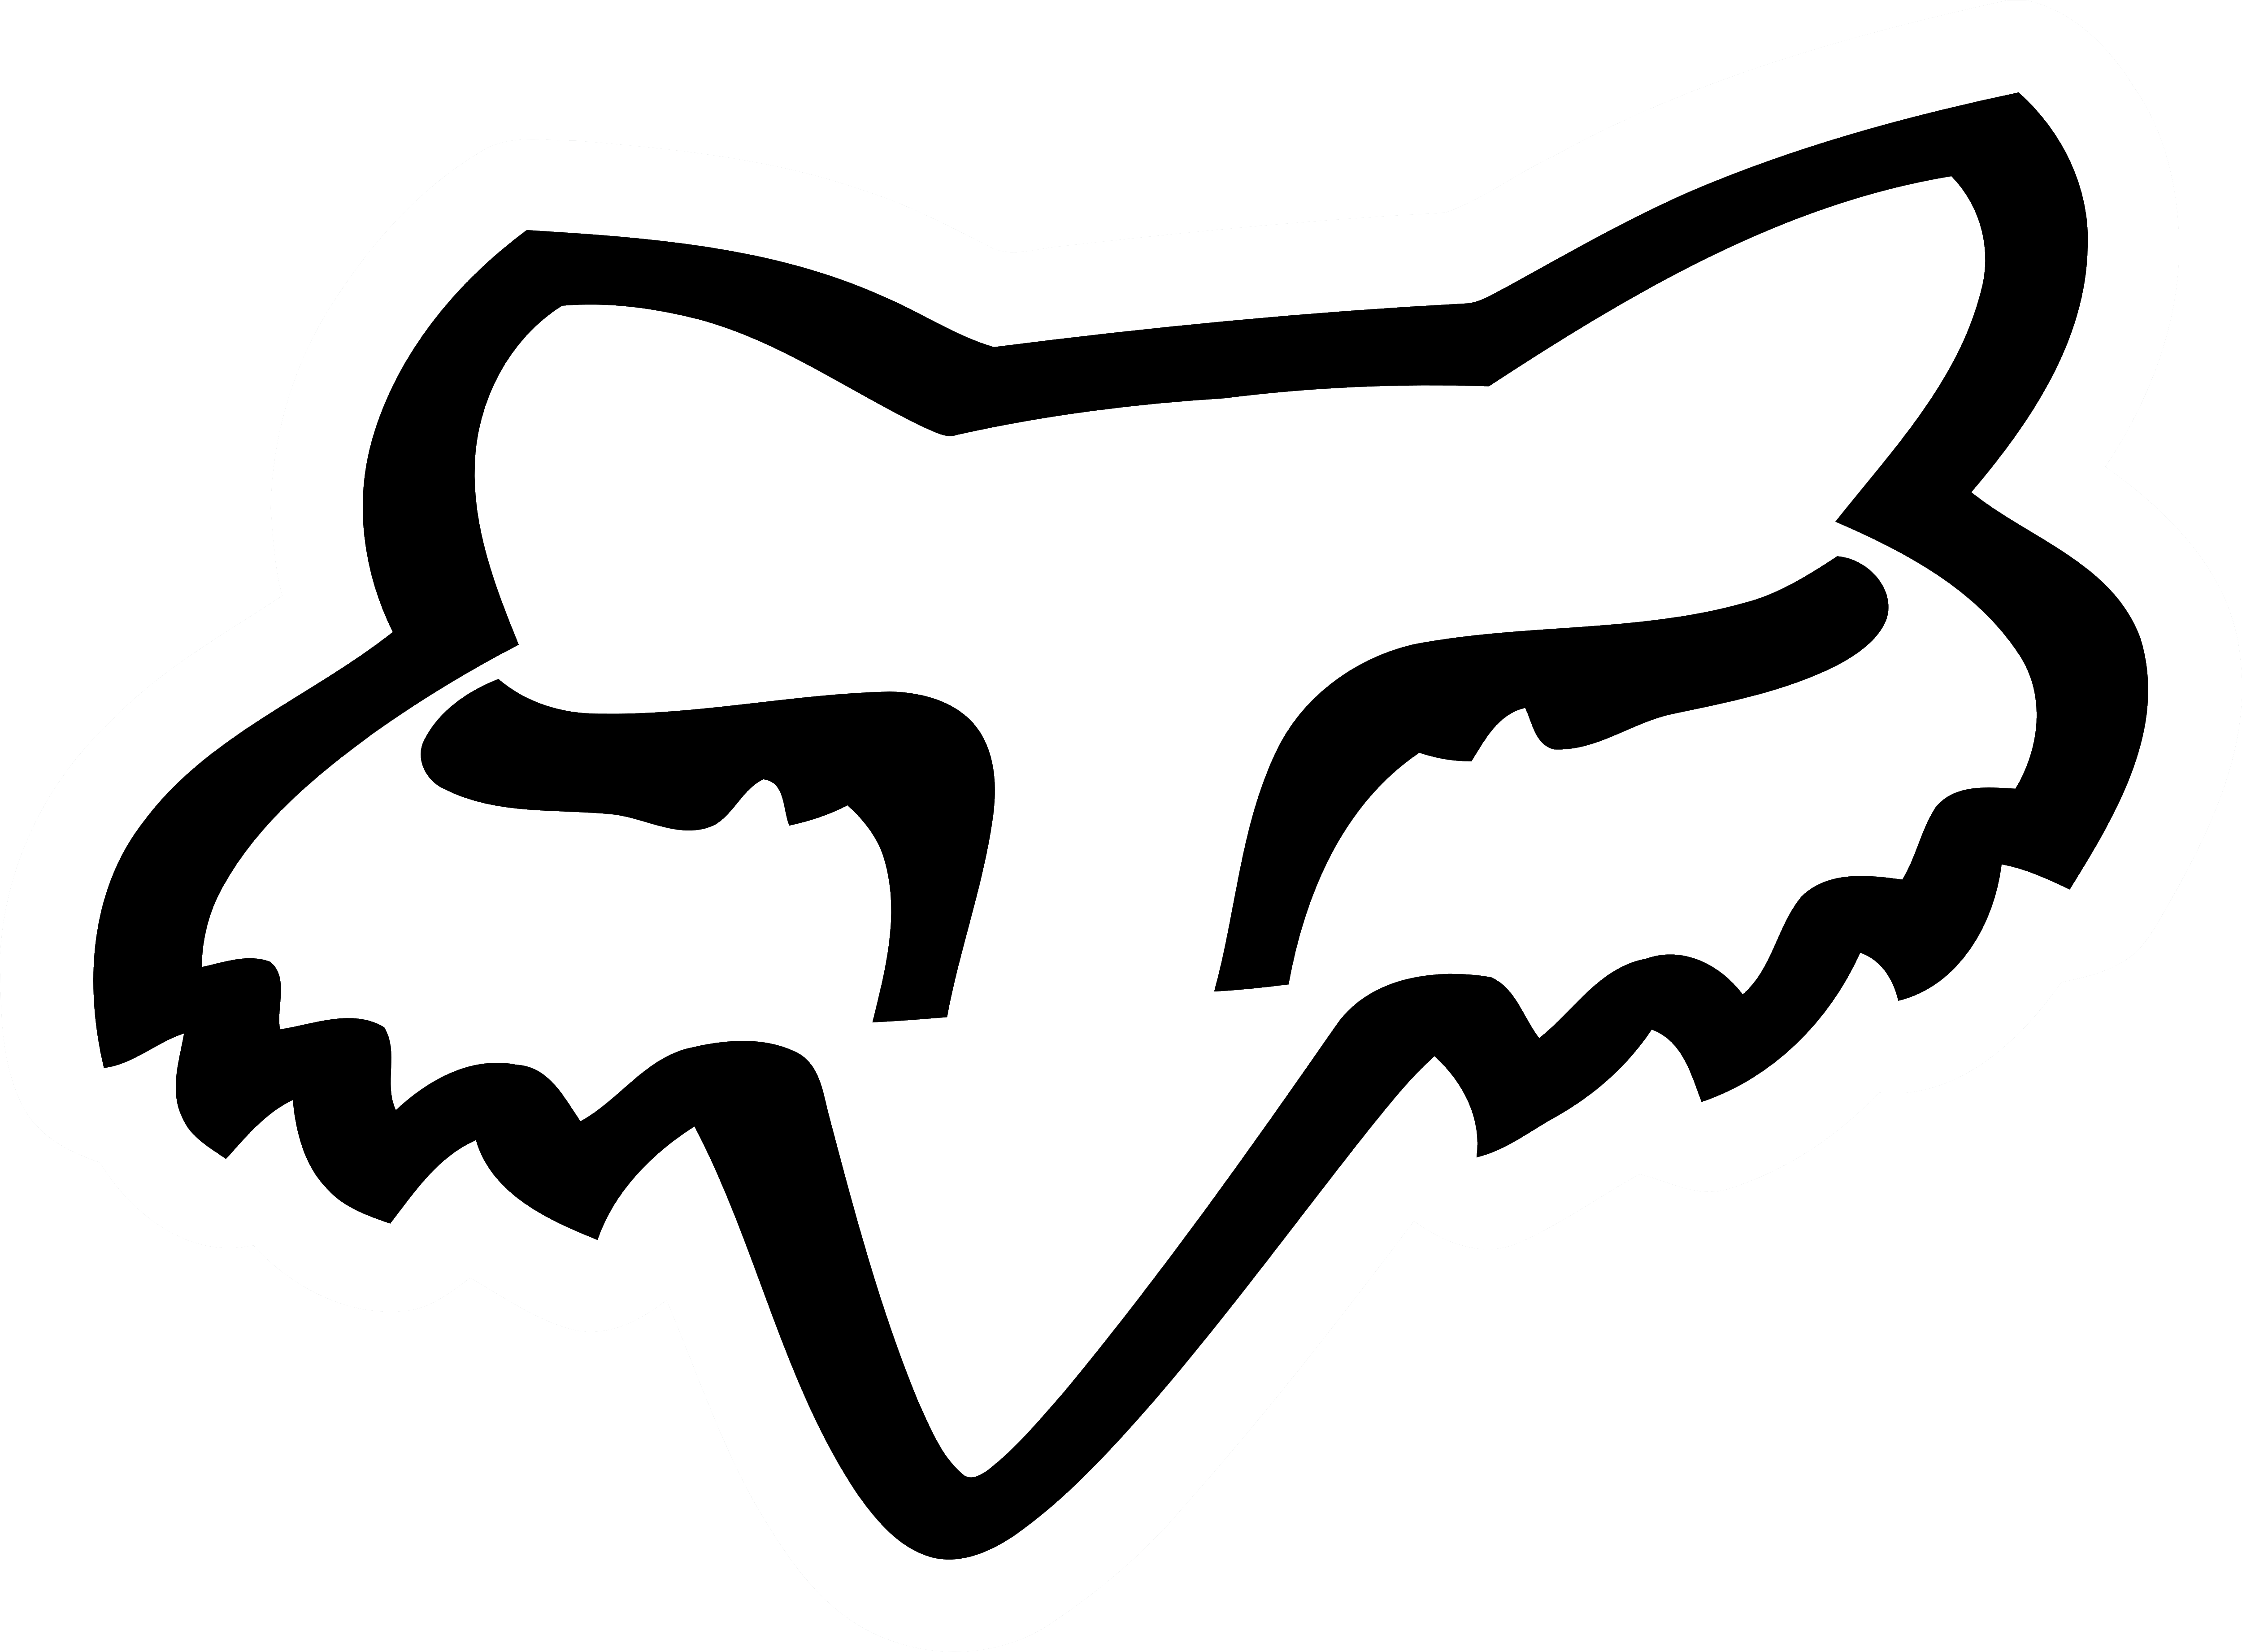 Fox Racing – Logos Download